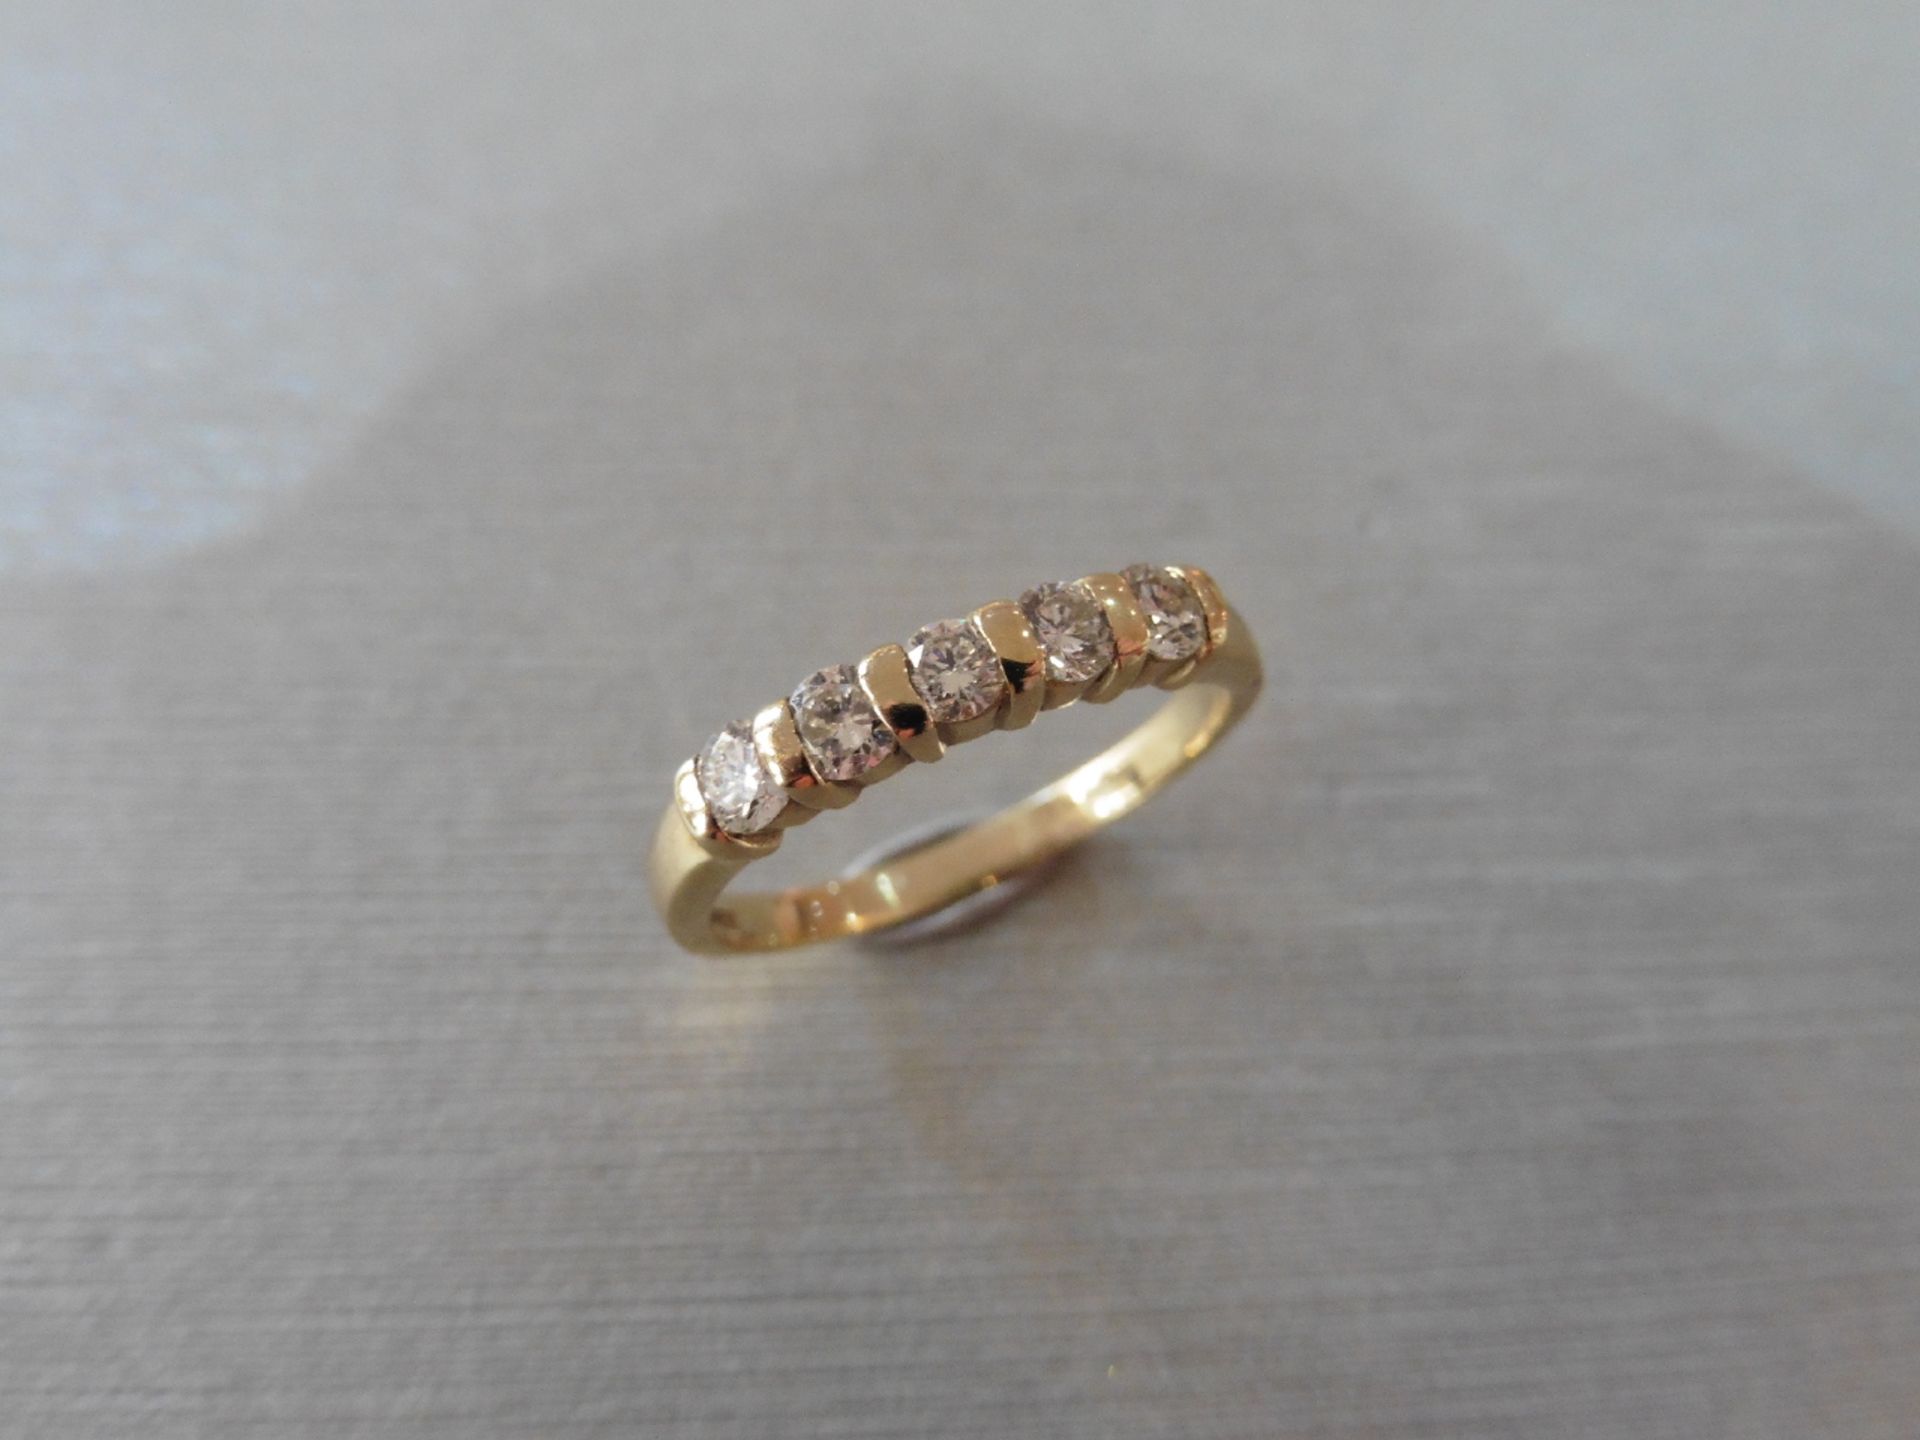 0.50ct diamond five stone ring set in 9ct yellow gold. Brilliant cut diamonds, I colour and si2